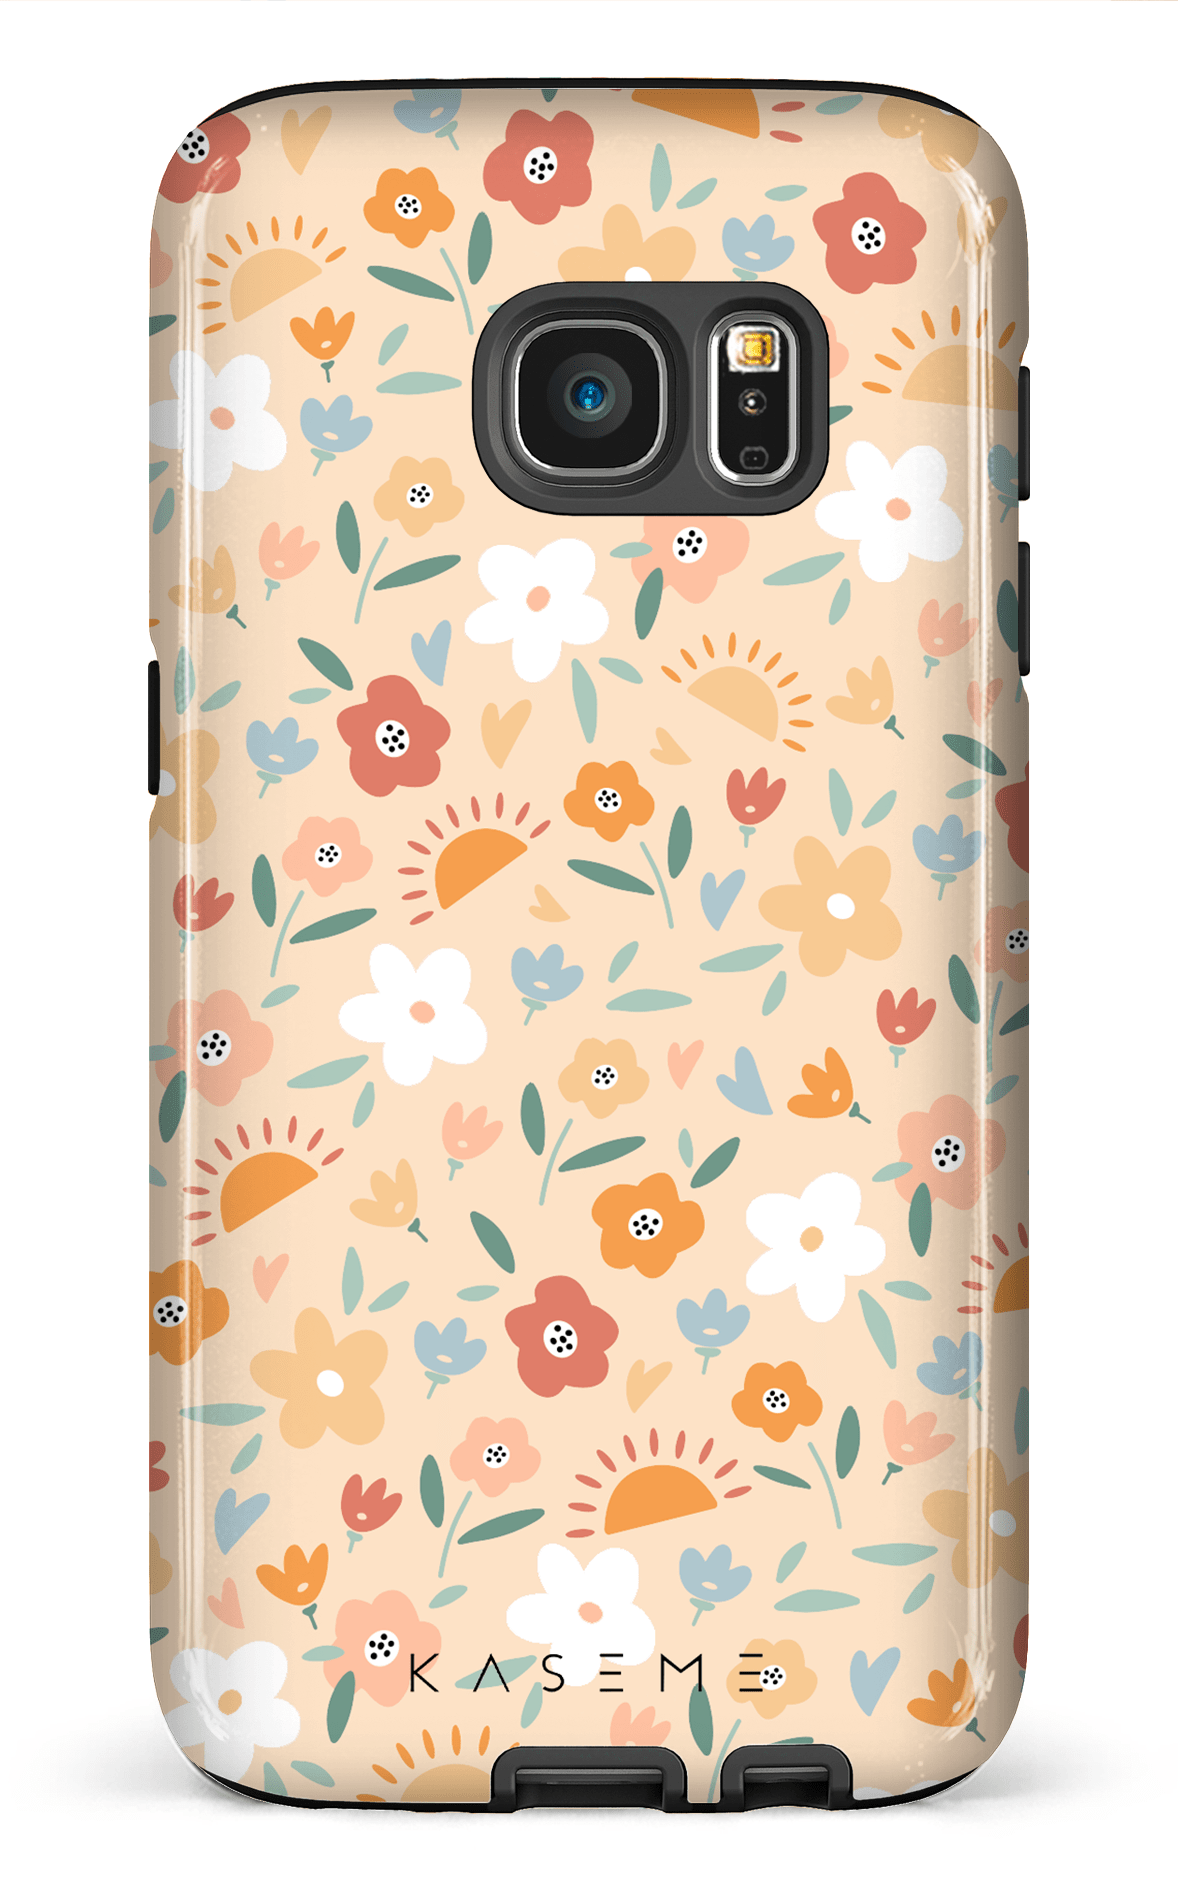 Endless summer orange by Élie Duquet - Galaxy S7